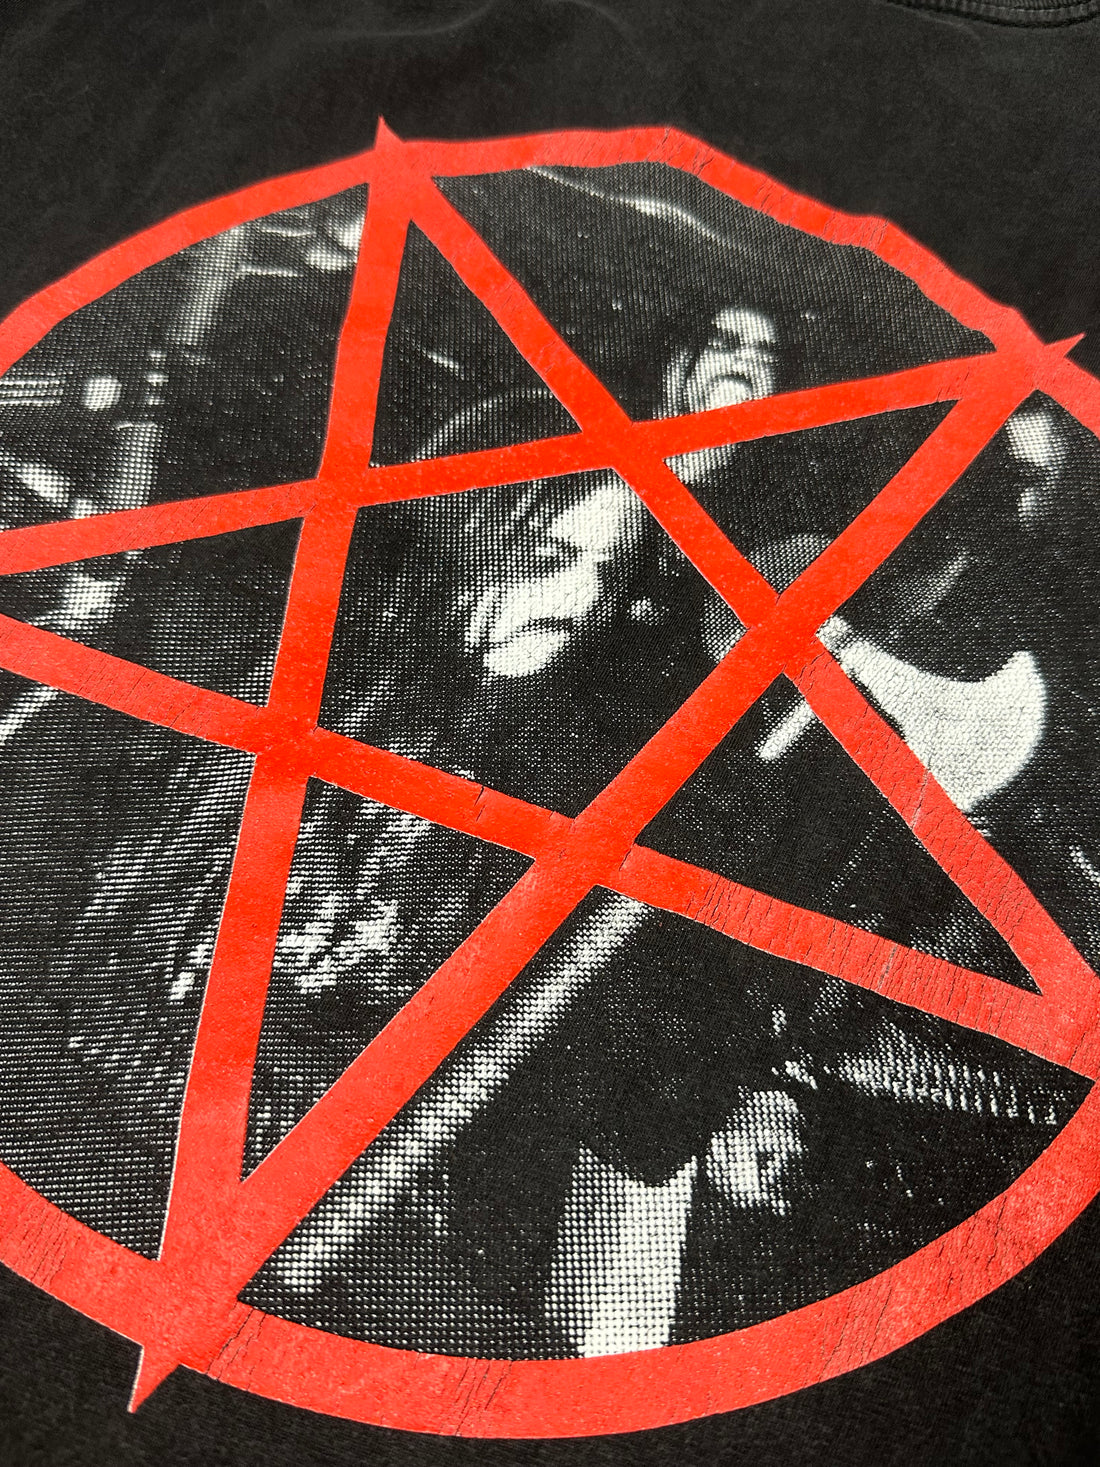 Emperor 1993 Rider Vintage Black Metal T-Shirt